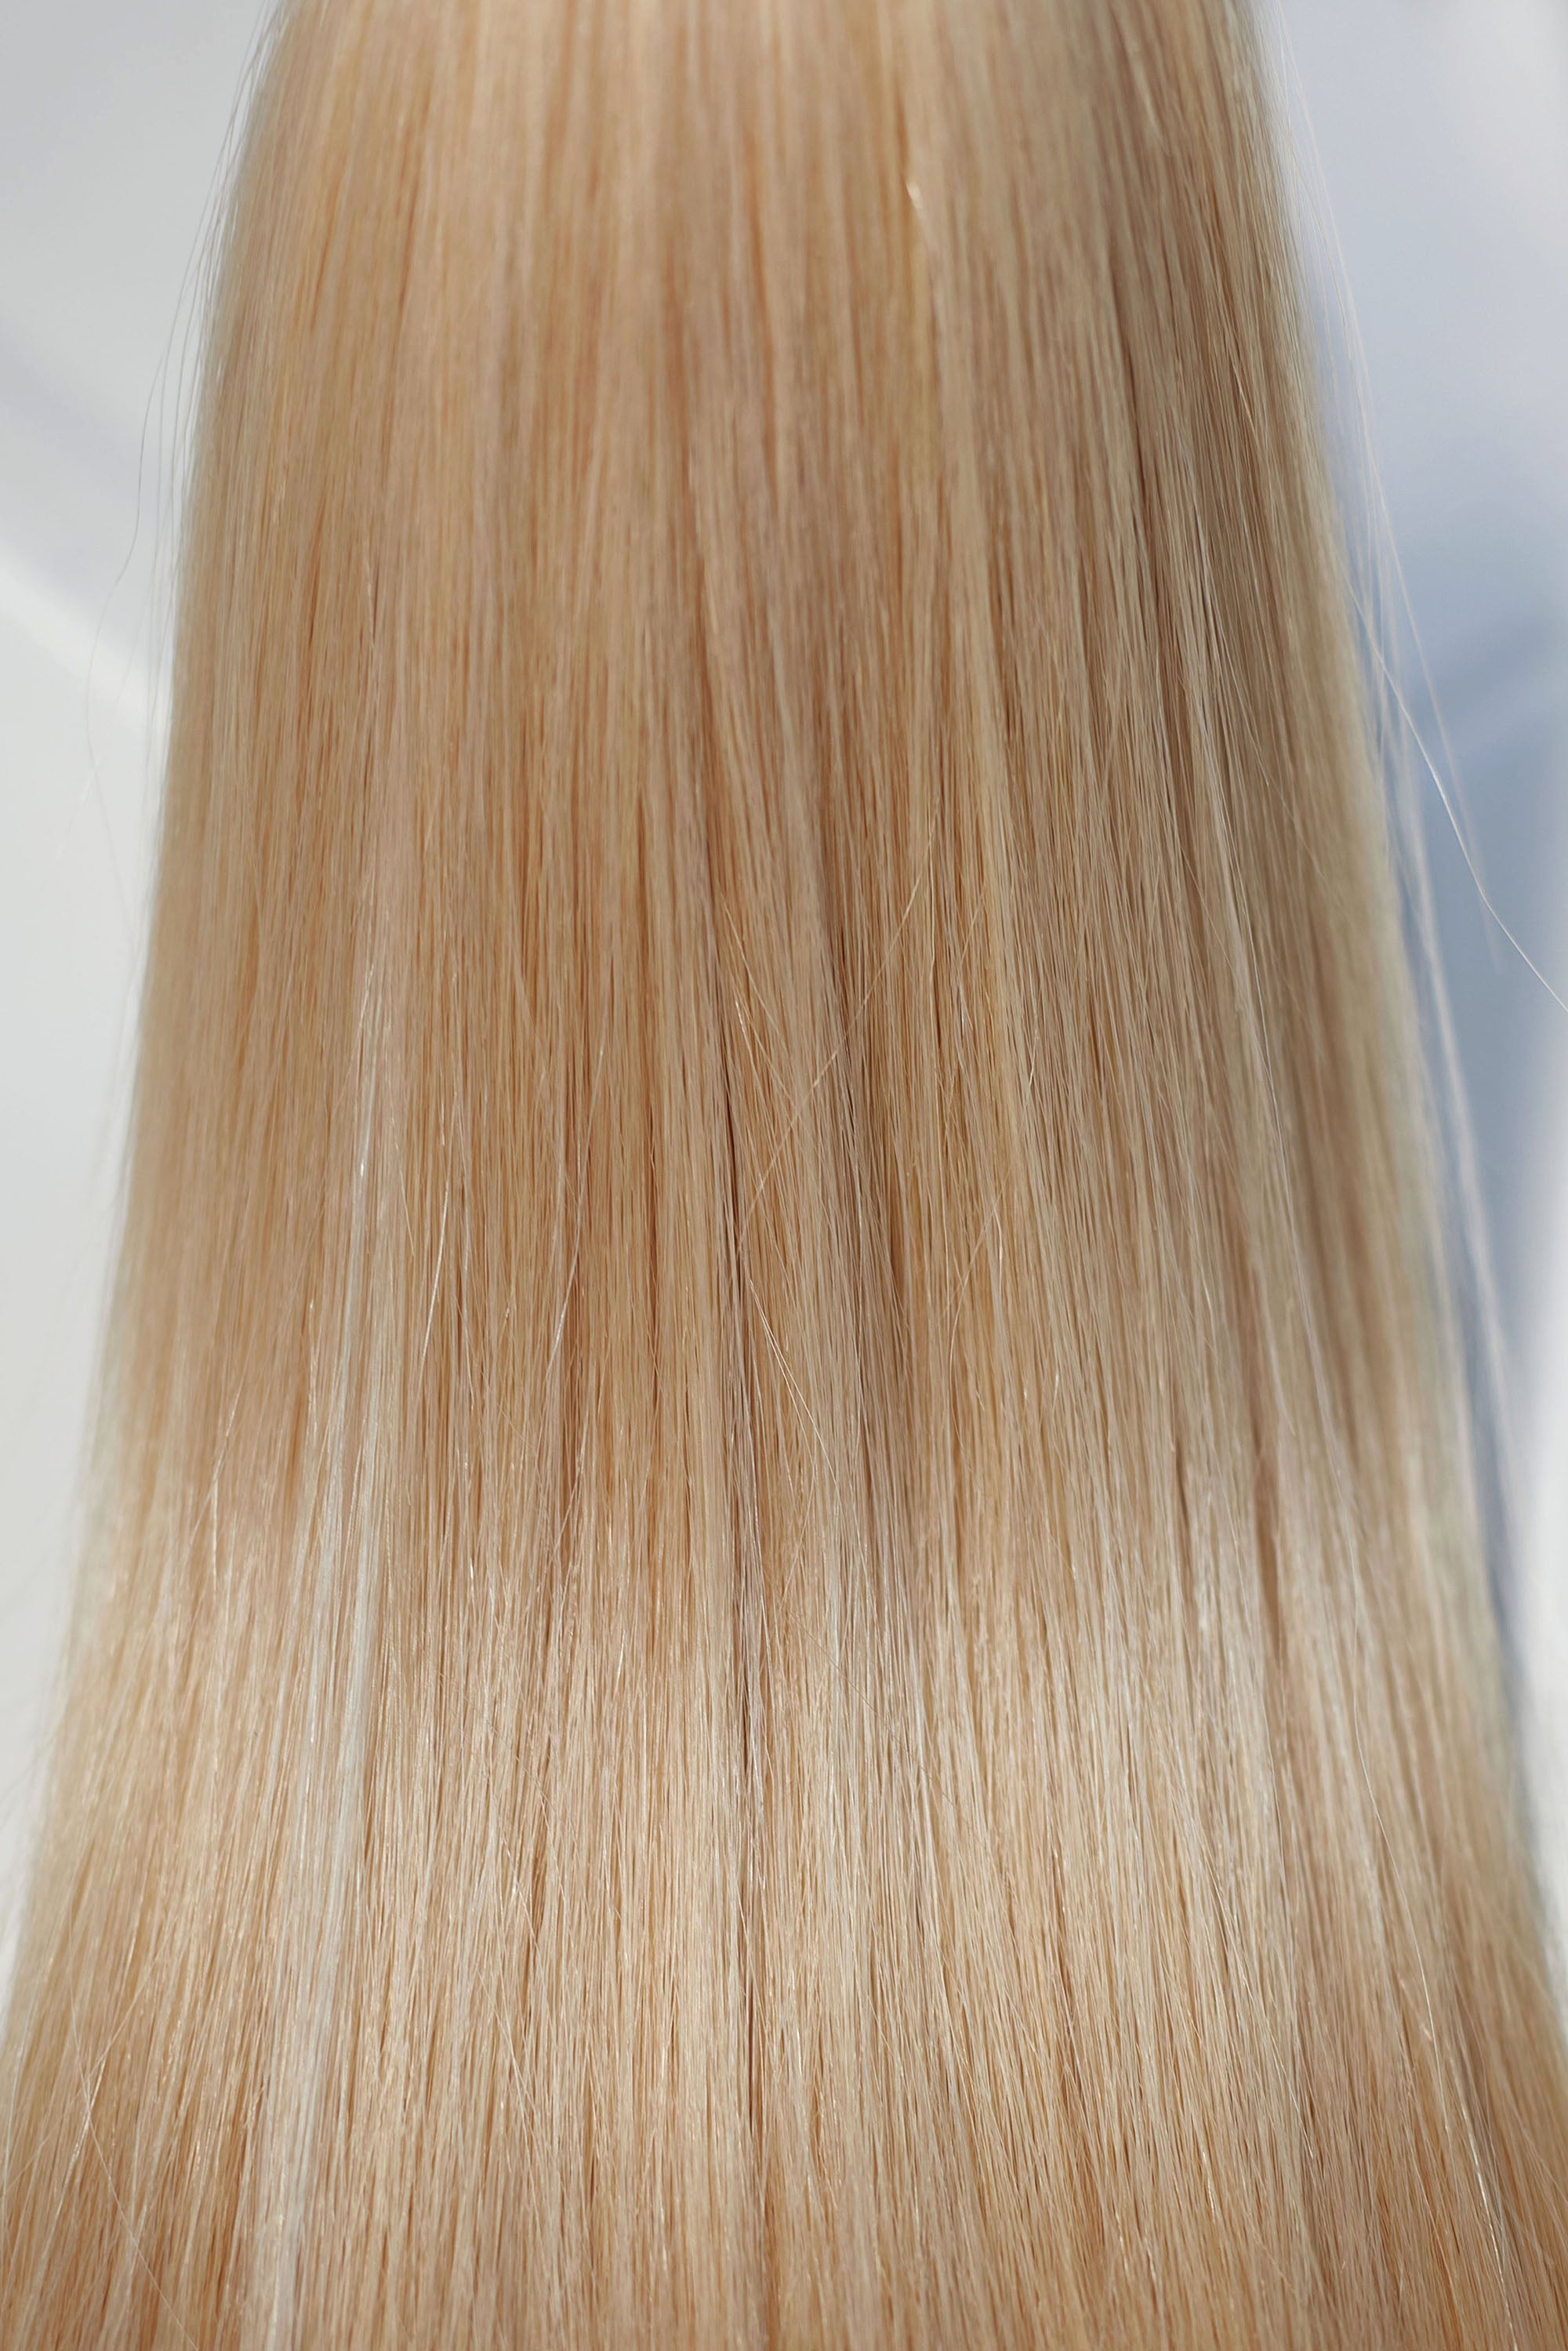 Behair professional Keratin Tip "Premium" 18" (45cm) Natural Straight Light Gold Blond #24 - 25g (Micro - 0.5g each pcs) hair extensions